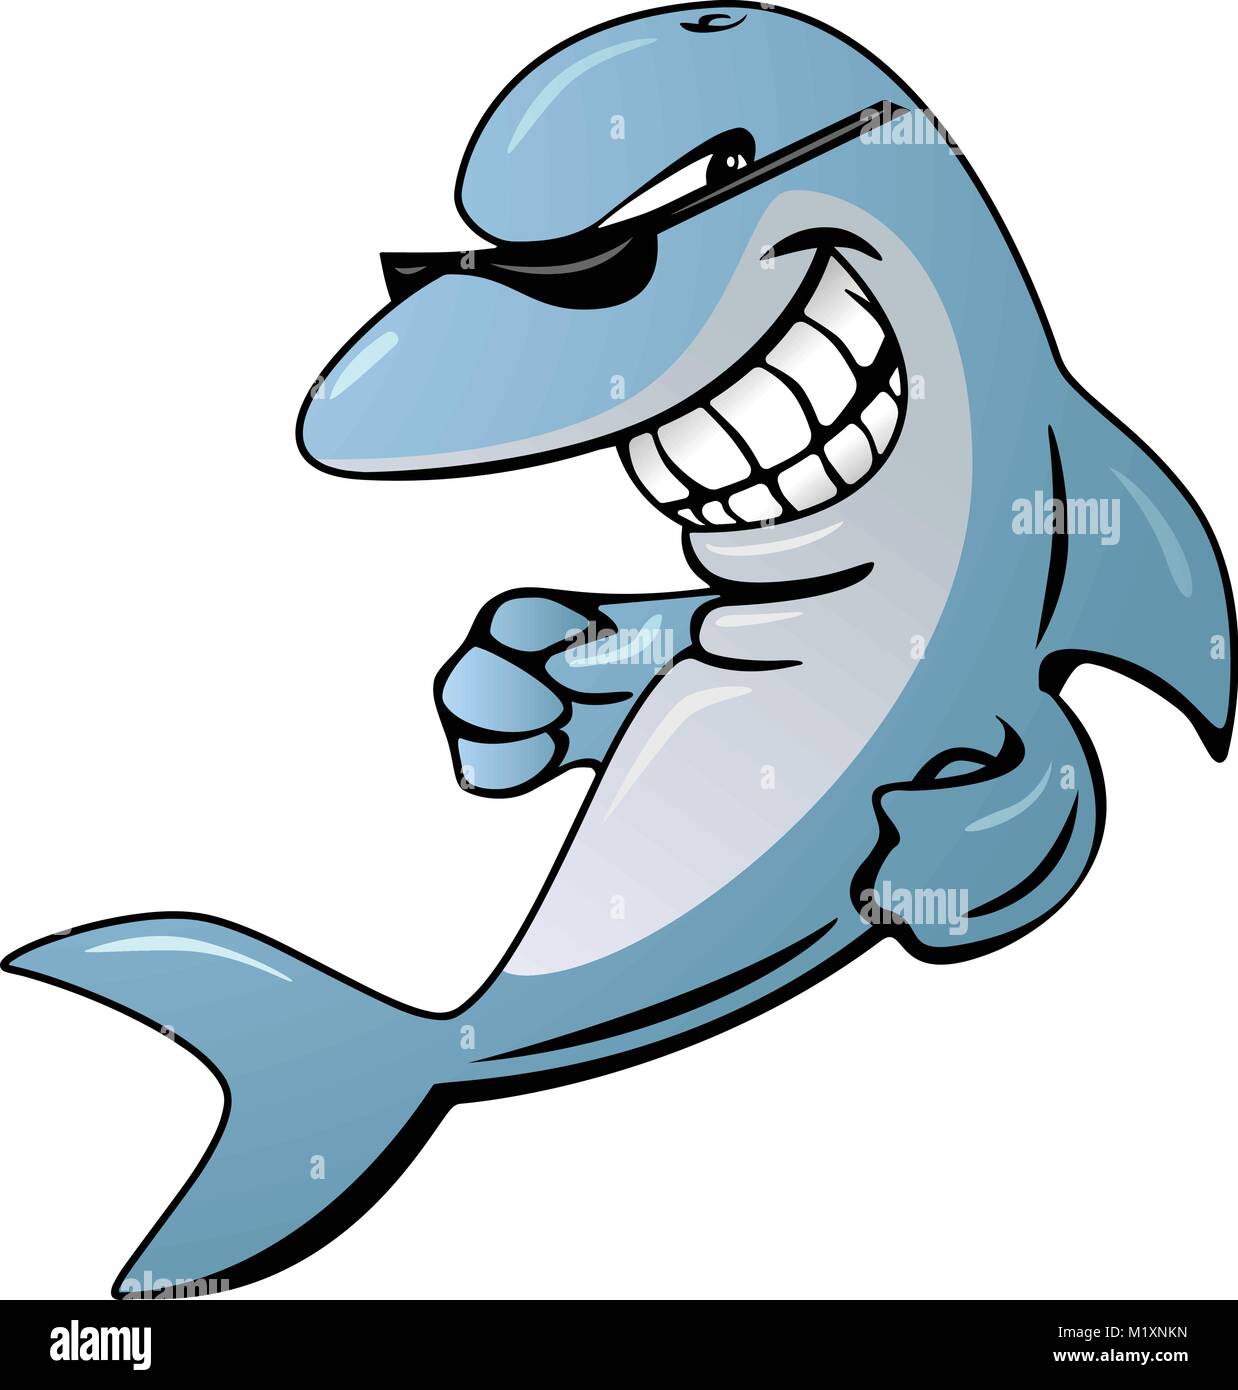 cartoon dolphin stockfotos & cartoon dolphin bilder - alamy